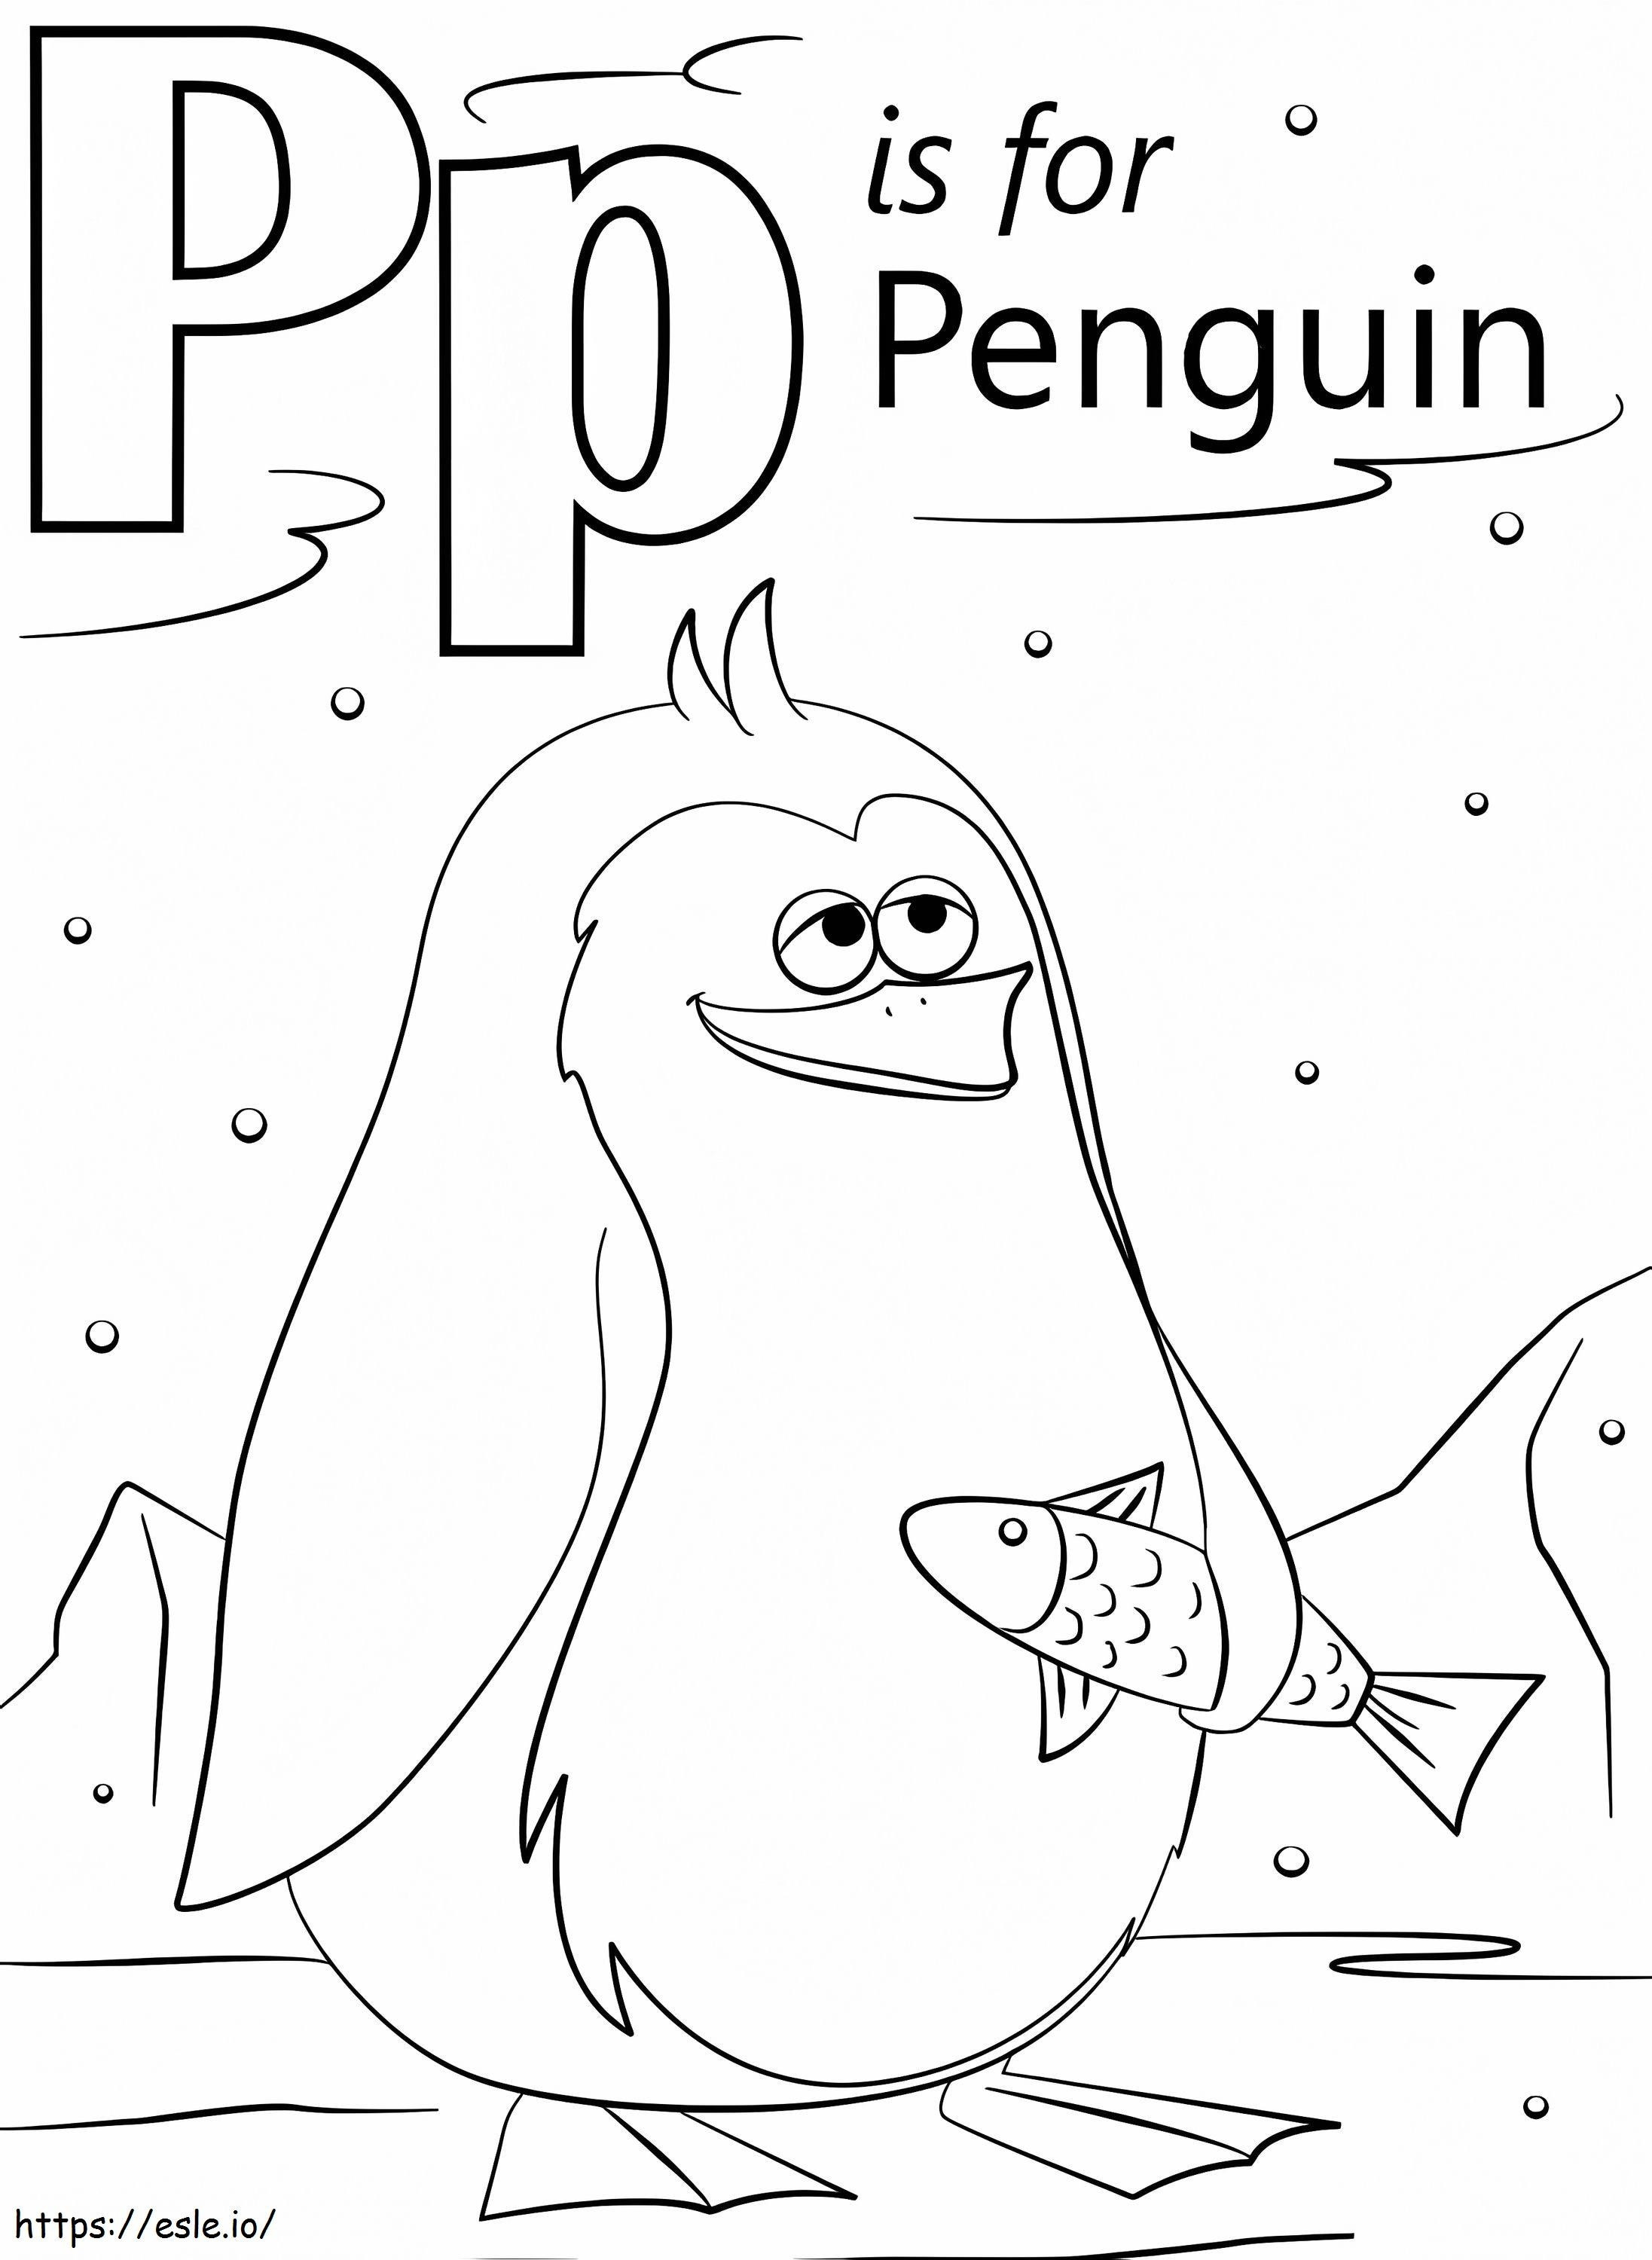 Letra de pingüino P para colorear